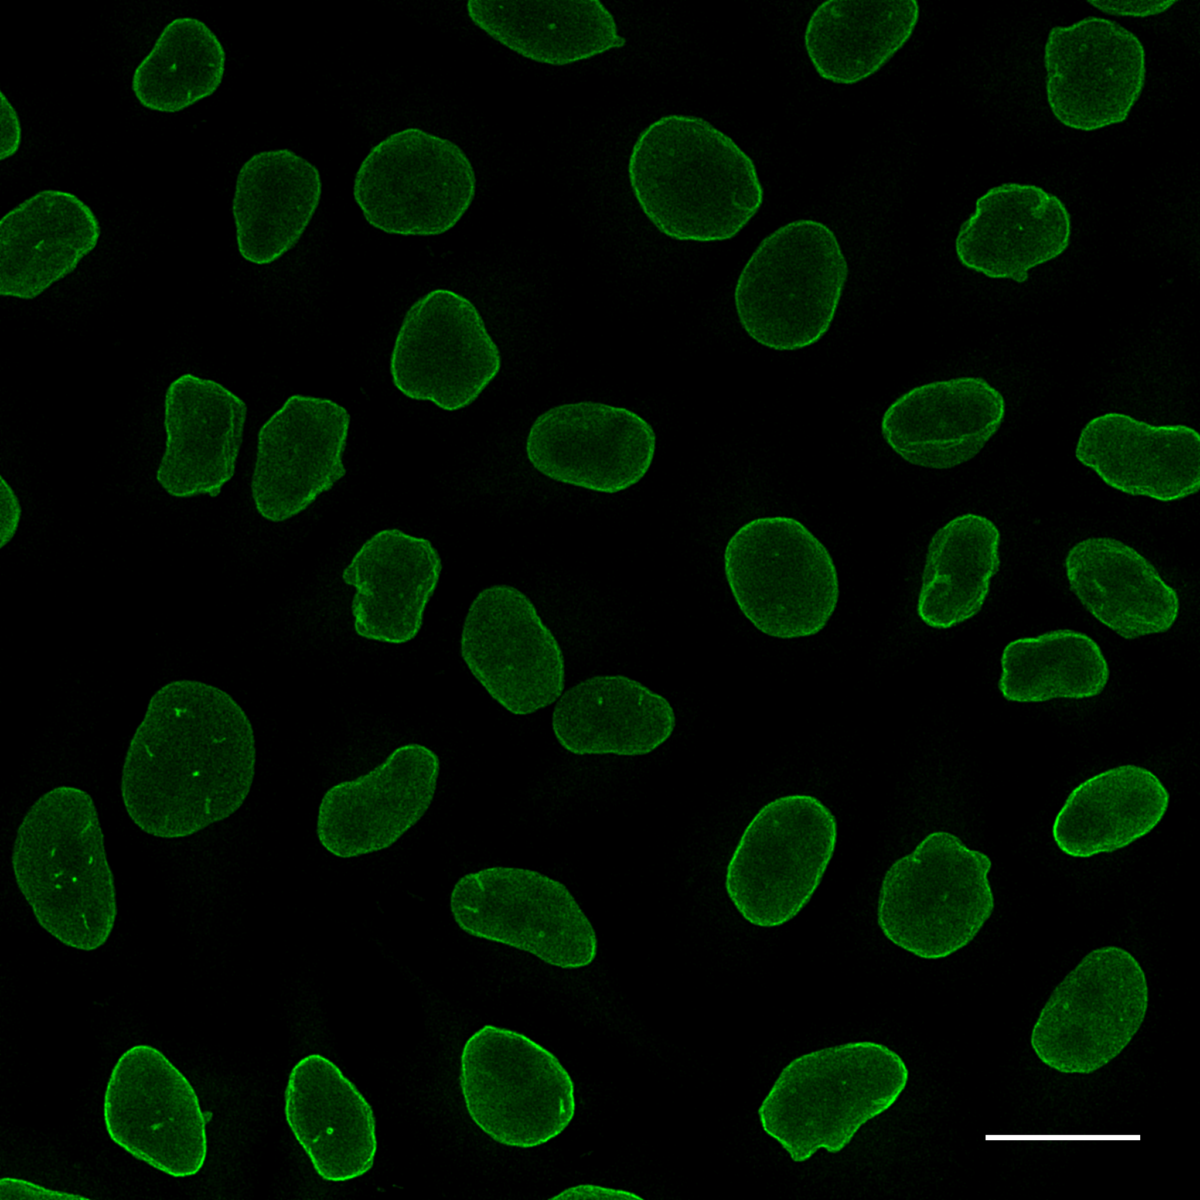 Immunostaining of nuclear lamina in HeLa cells with rabbit anti-Lamin B1 antibodiesand Nano-Secondary® alpaca anti-human IgG/anti-rabbit IgG, recombinant VHH, AlexaFluor® 488 [CTK0101, CTK0102] 1:1,000 (green). Scale bar, 20 µM.